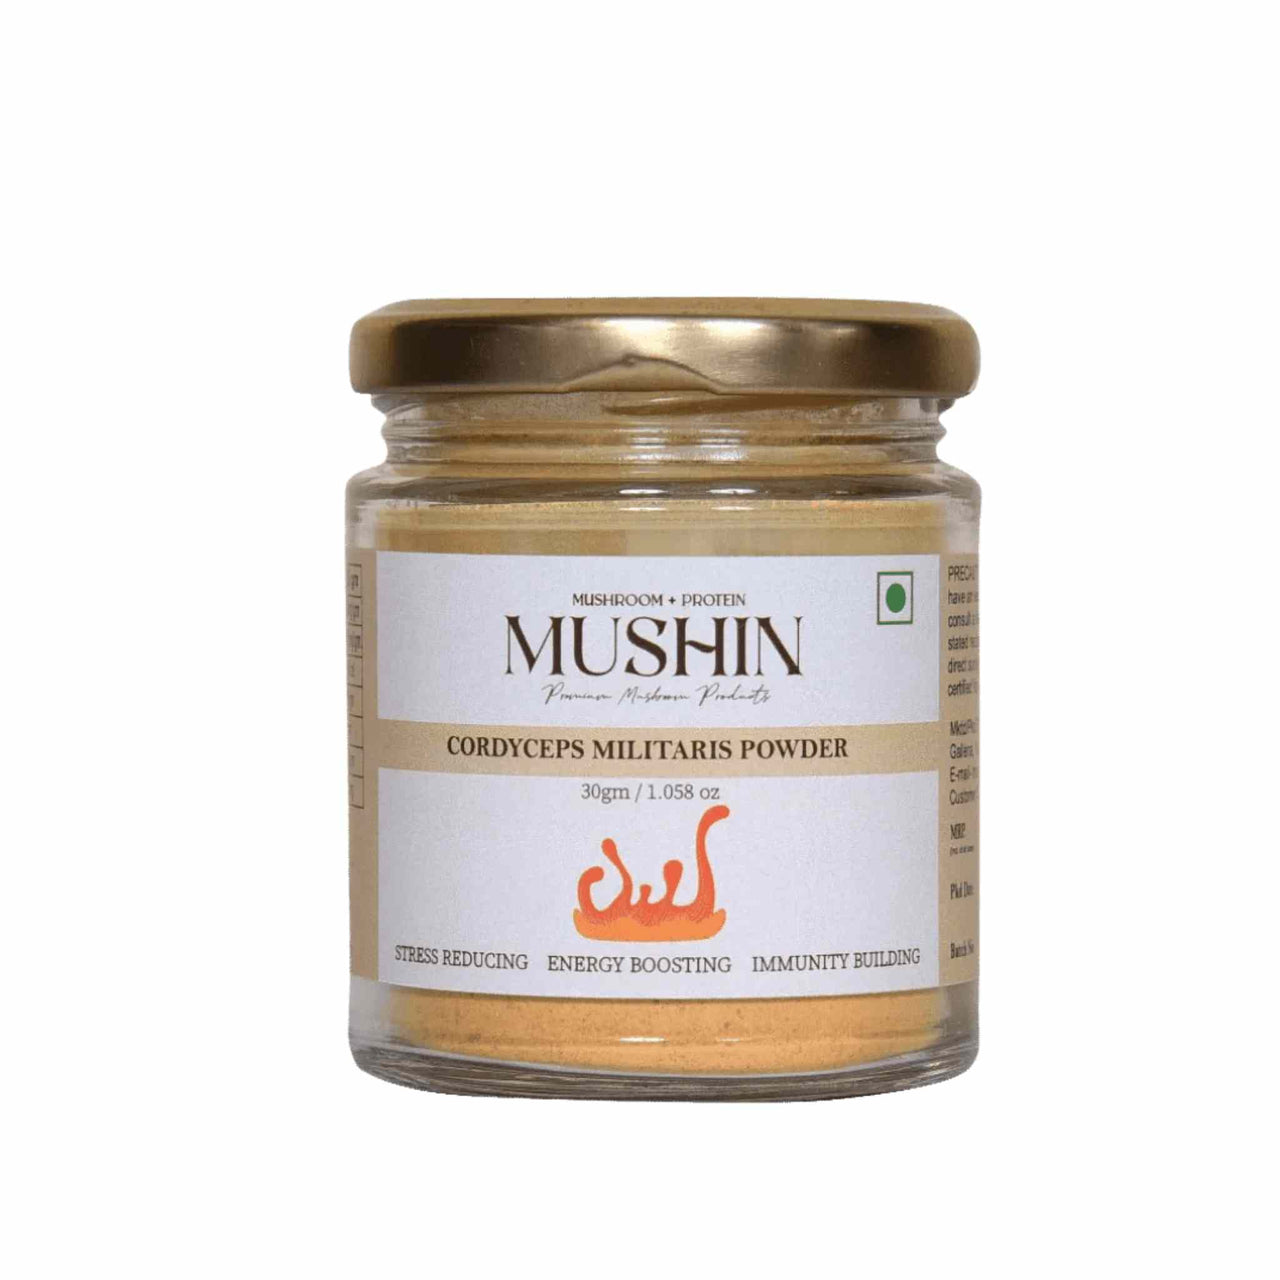 Mushin - Cordyceps Militaris Powder Supplement – Improve Energy, Stamina and Endurance